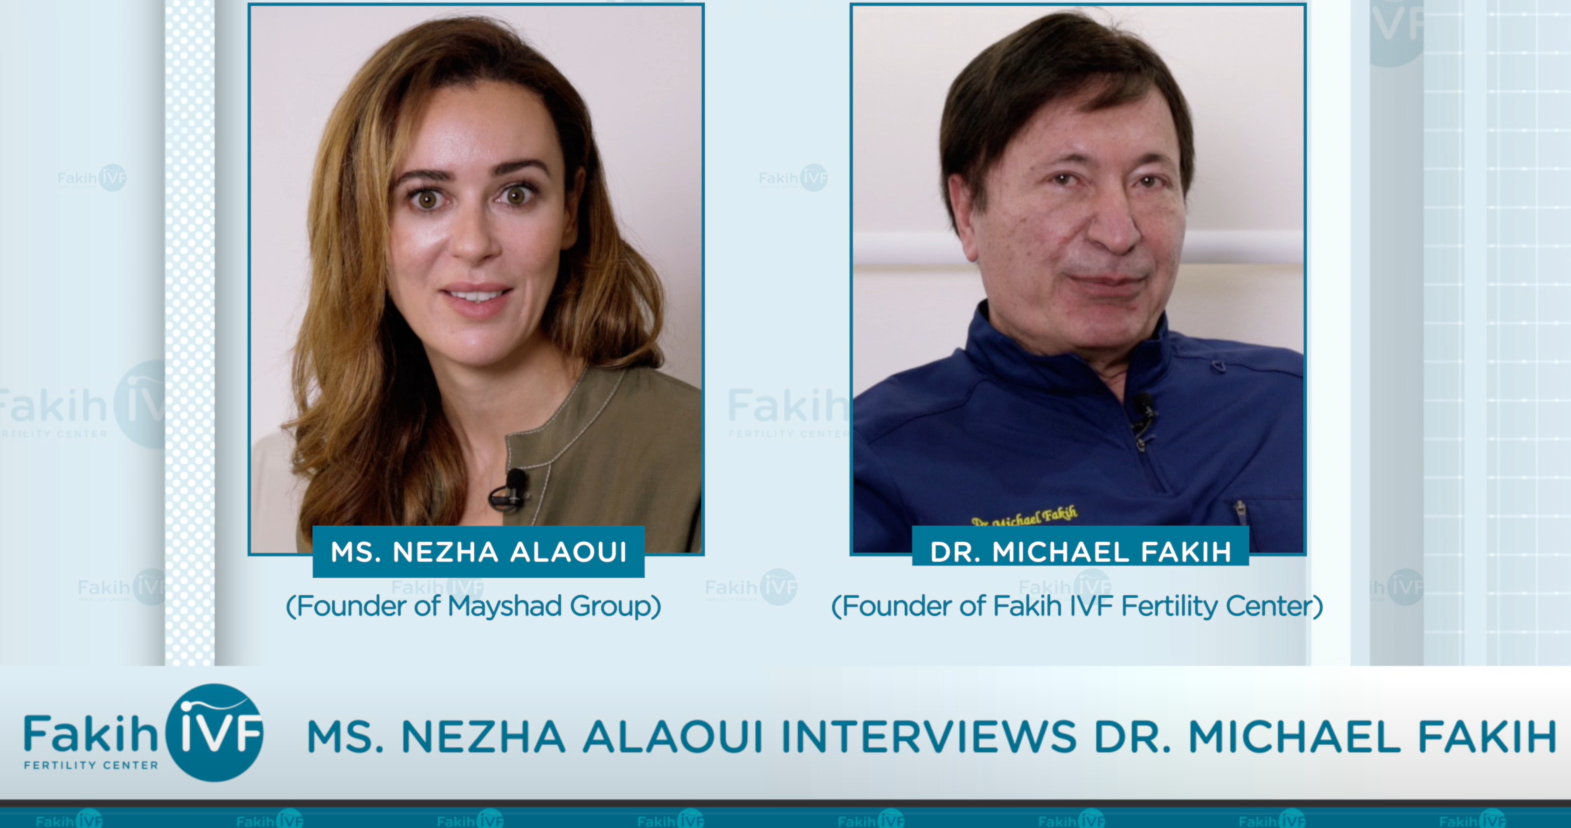 Ms. Nezha Alaoui interviews Dr. Michael Fakih